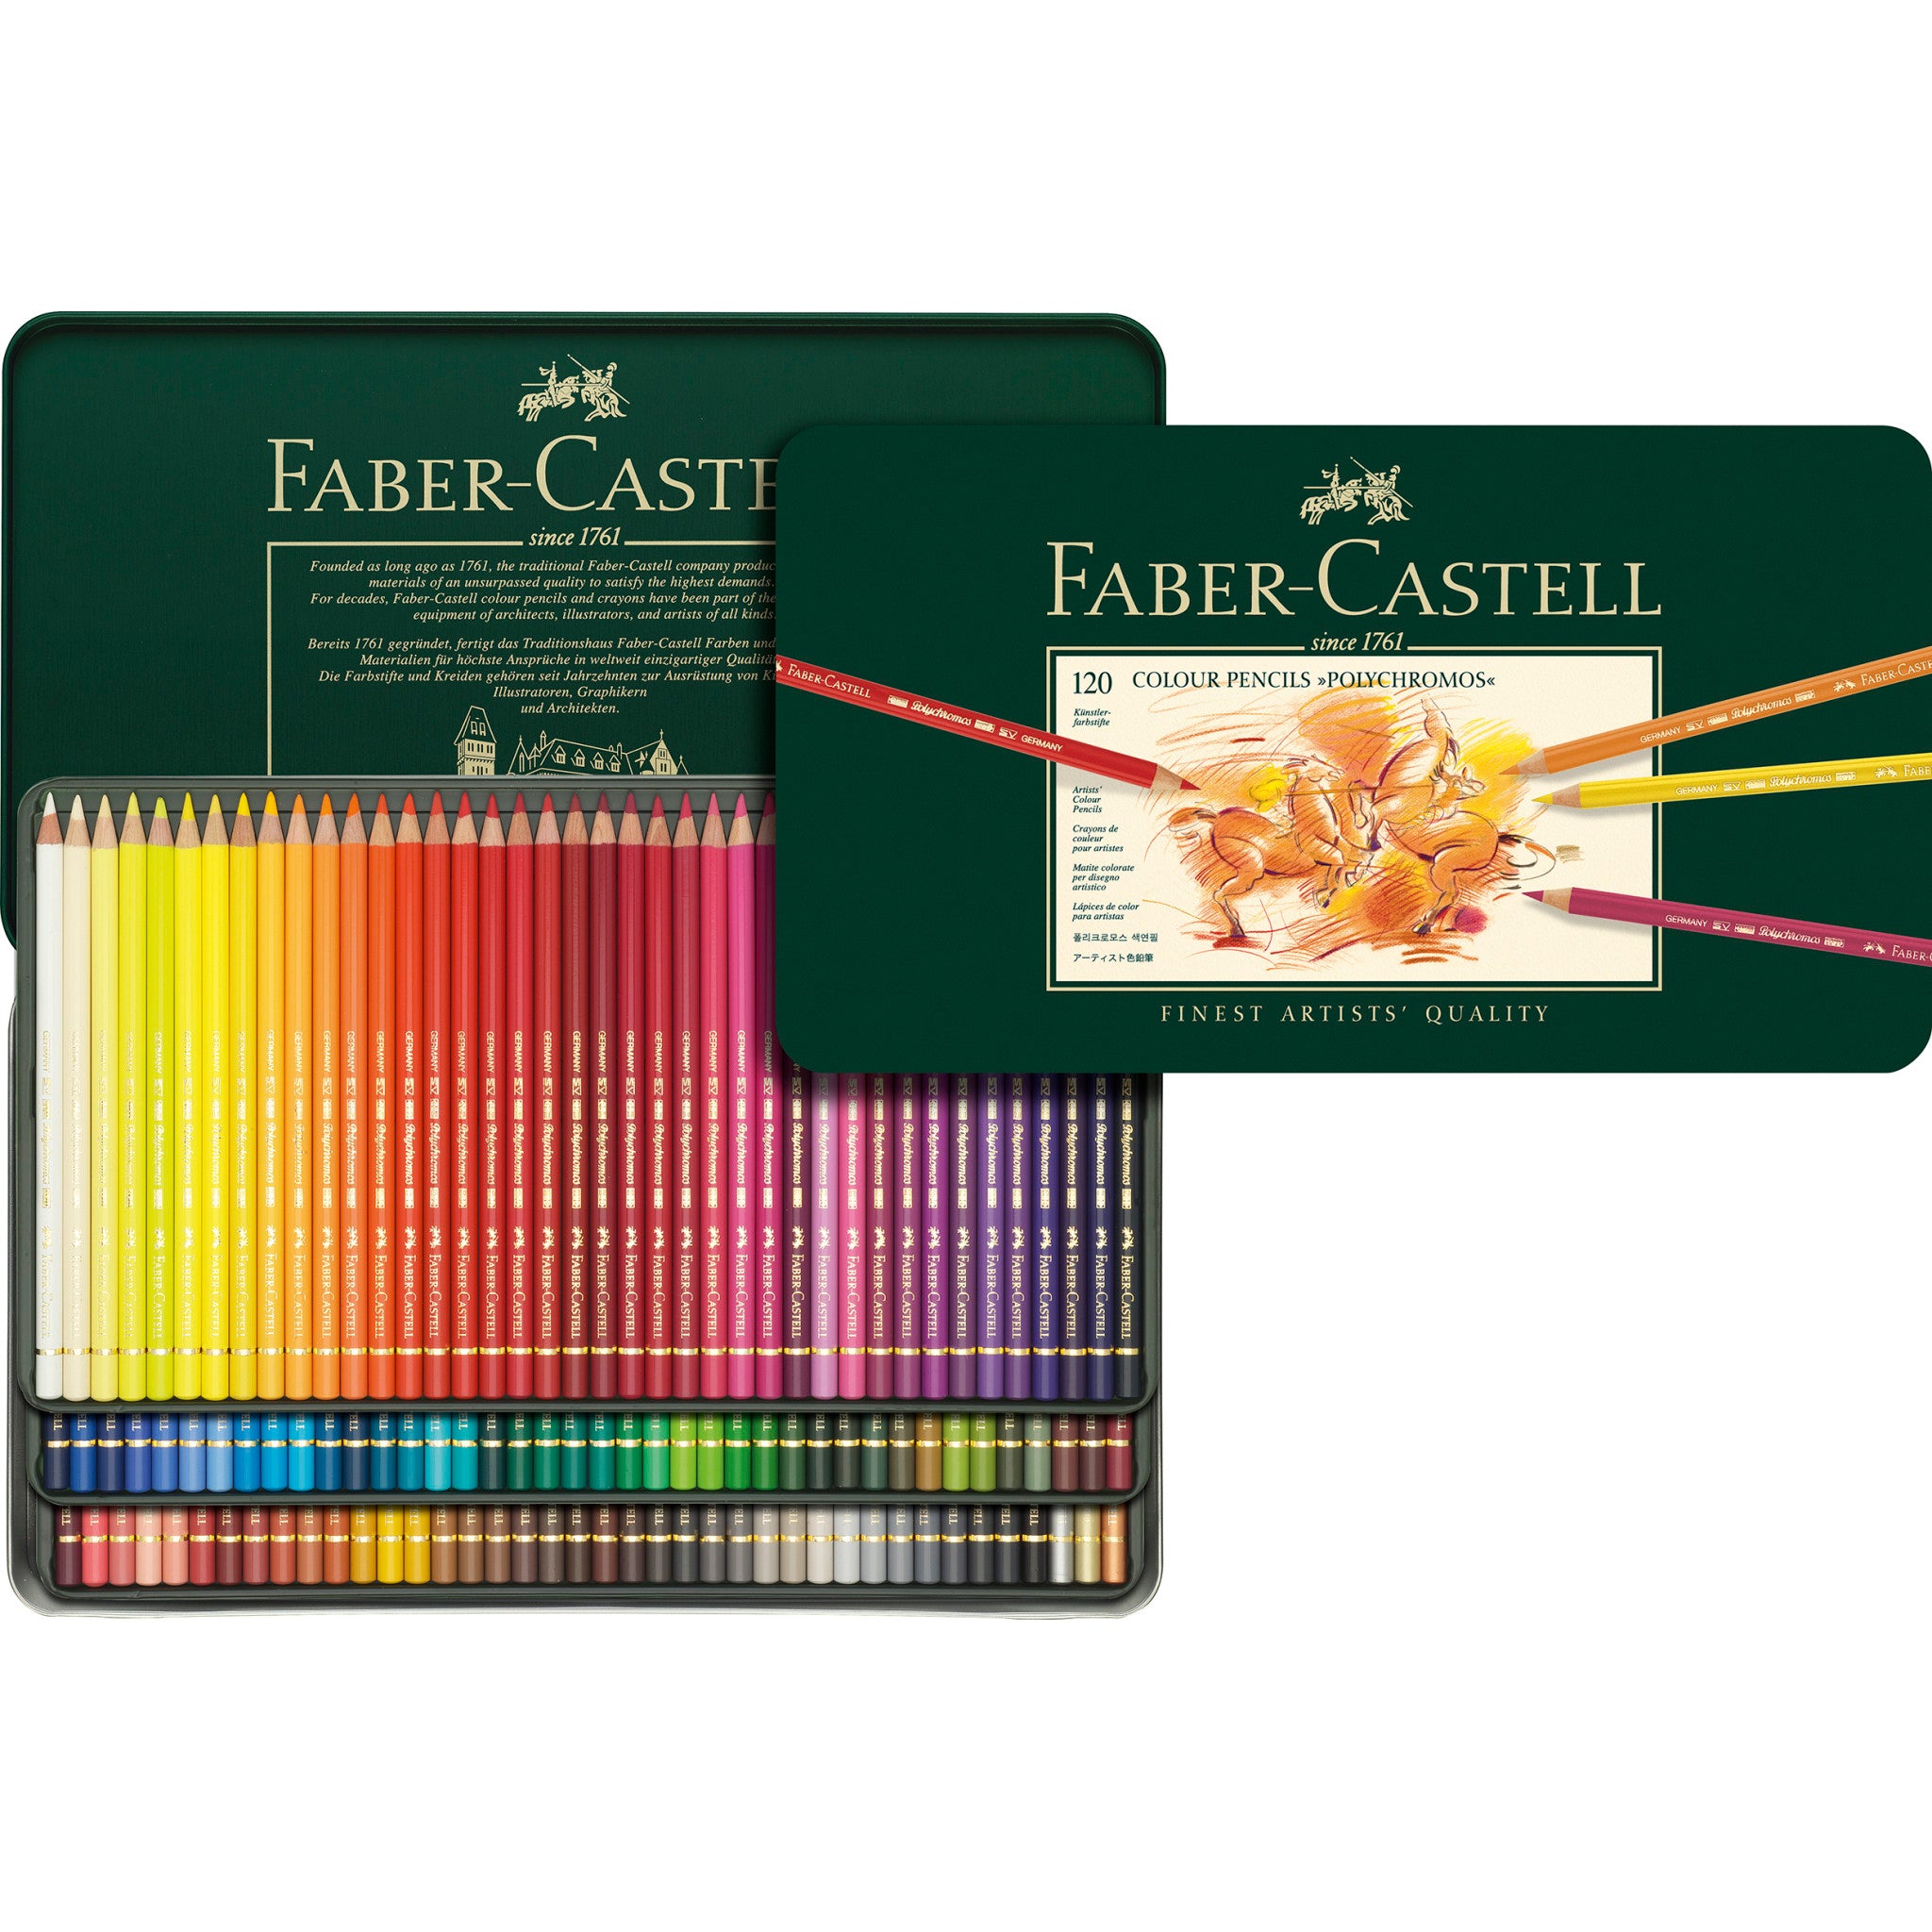 Color Pencils for Adults: Polychromos Artists Color Pencils 26